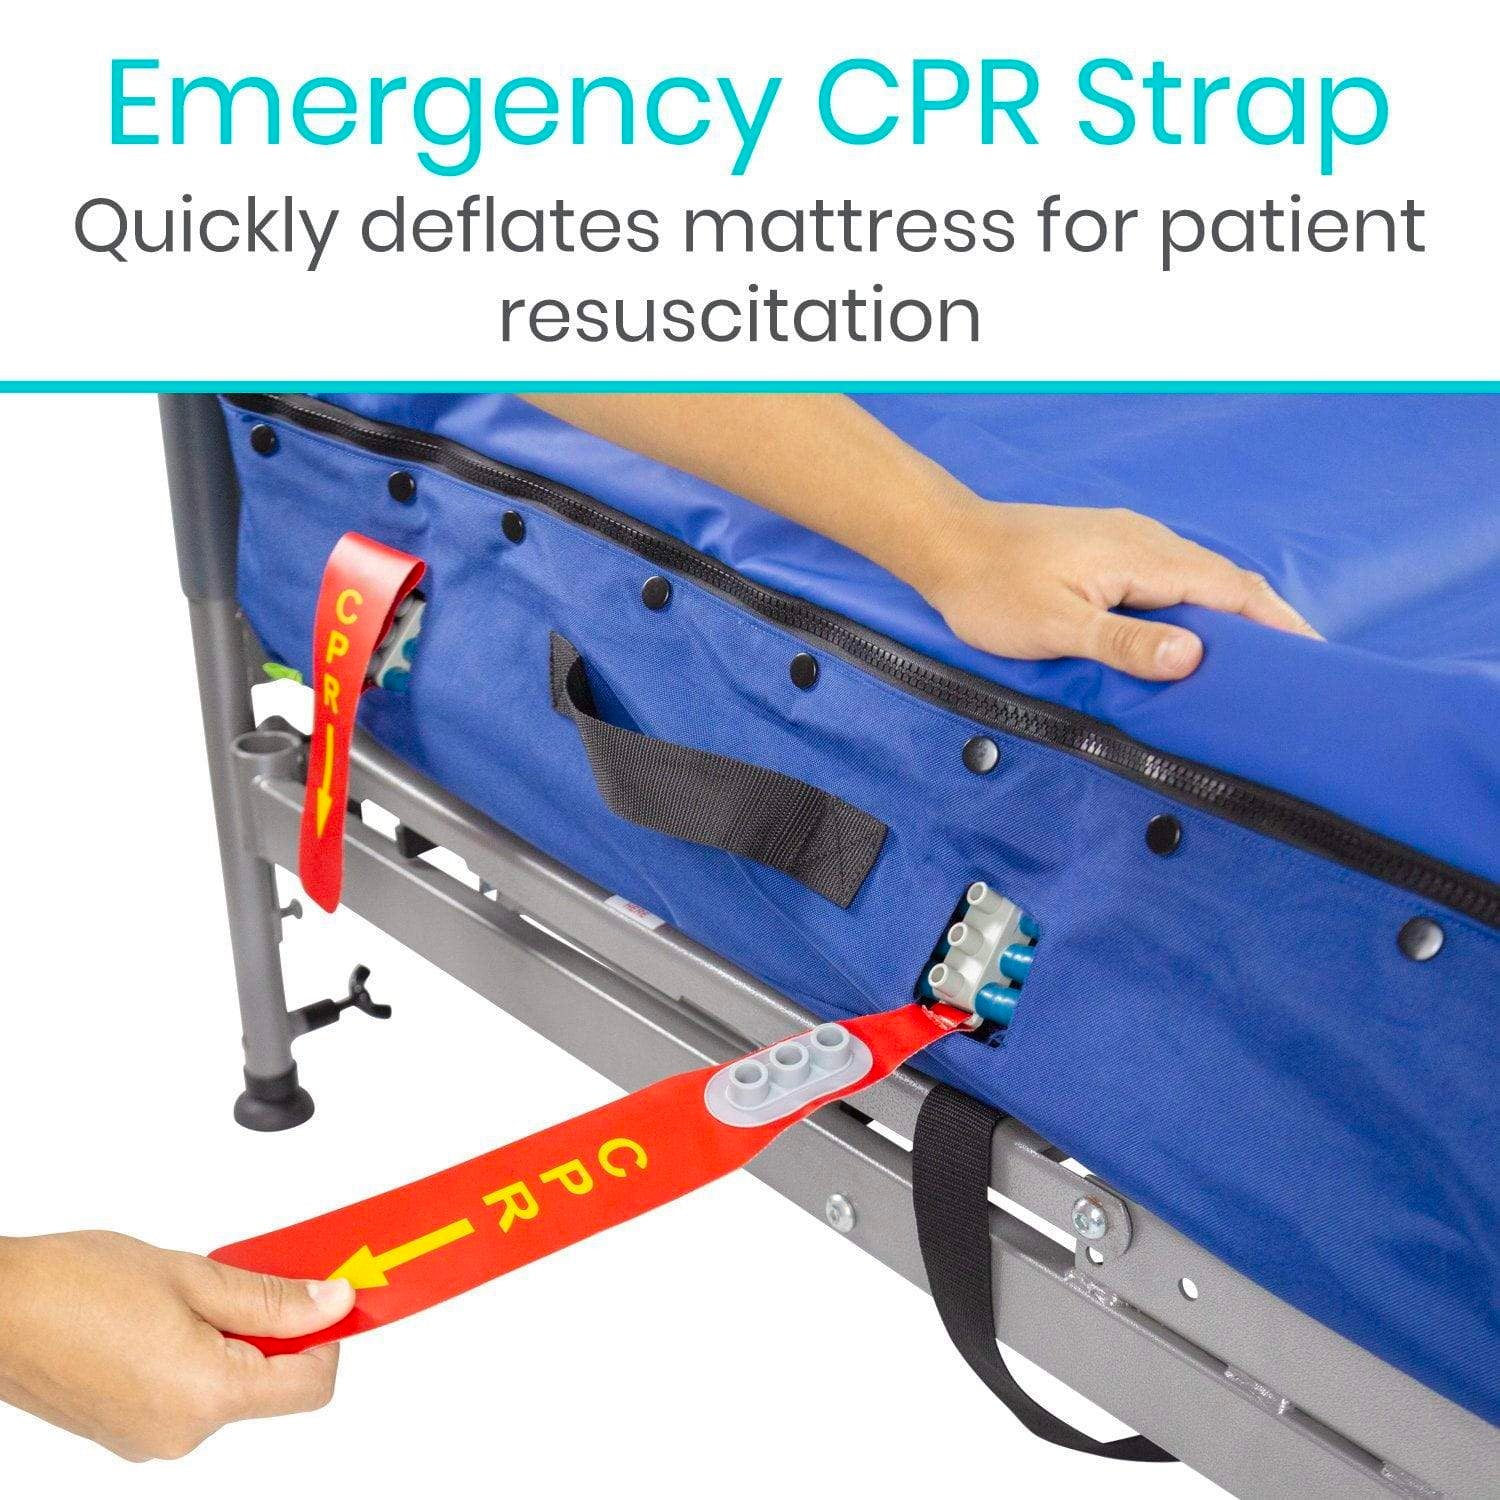 Alternate pressure low air loss 8" mattress emergency CPR deflate strap